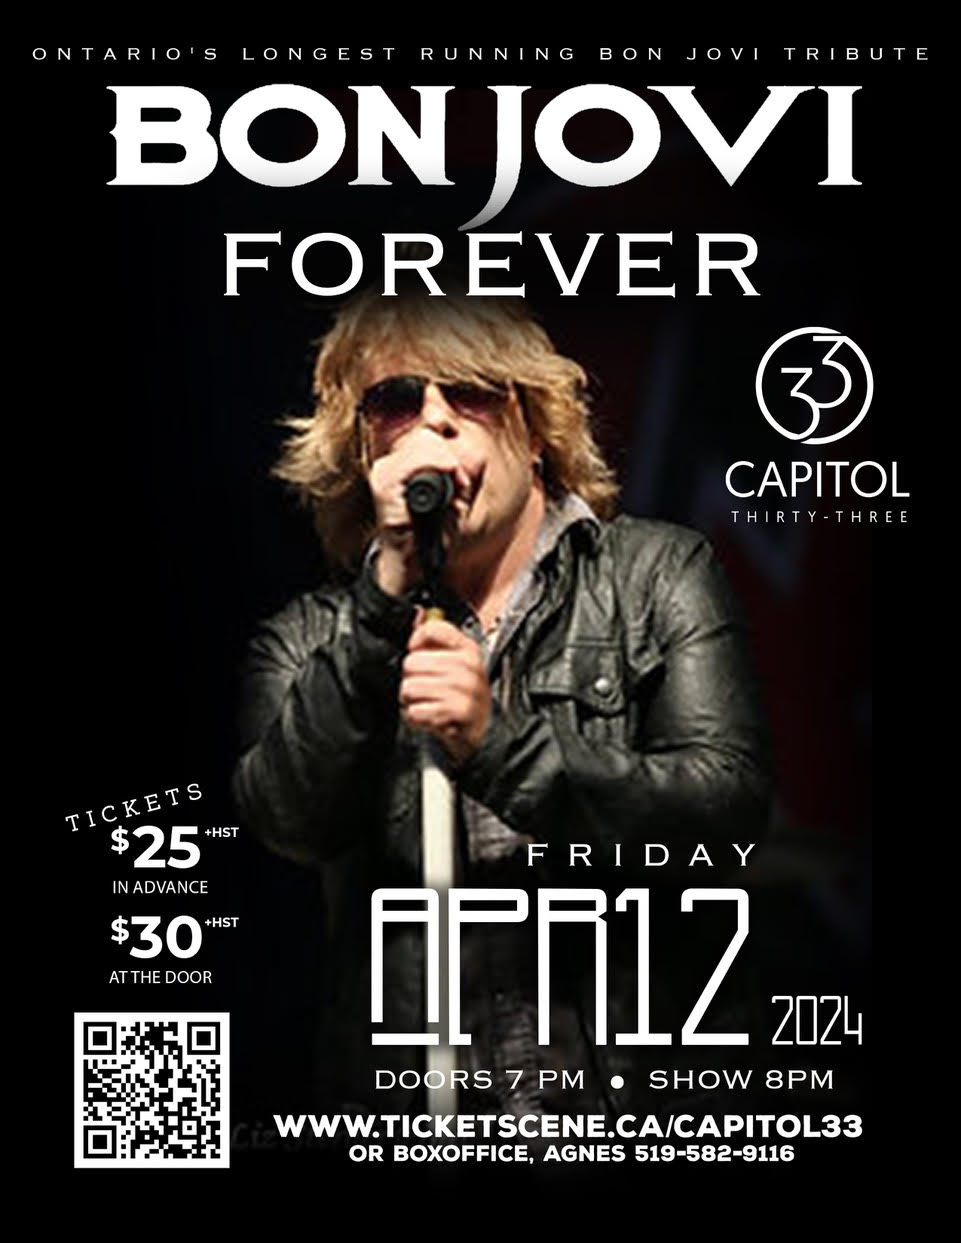 Bon Jovi Forever - a tribute to